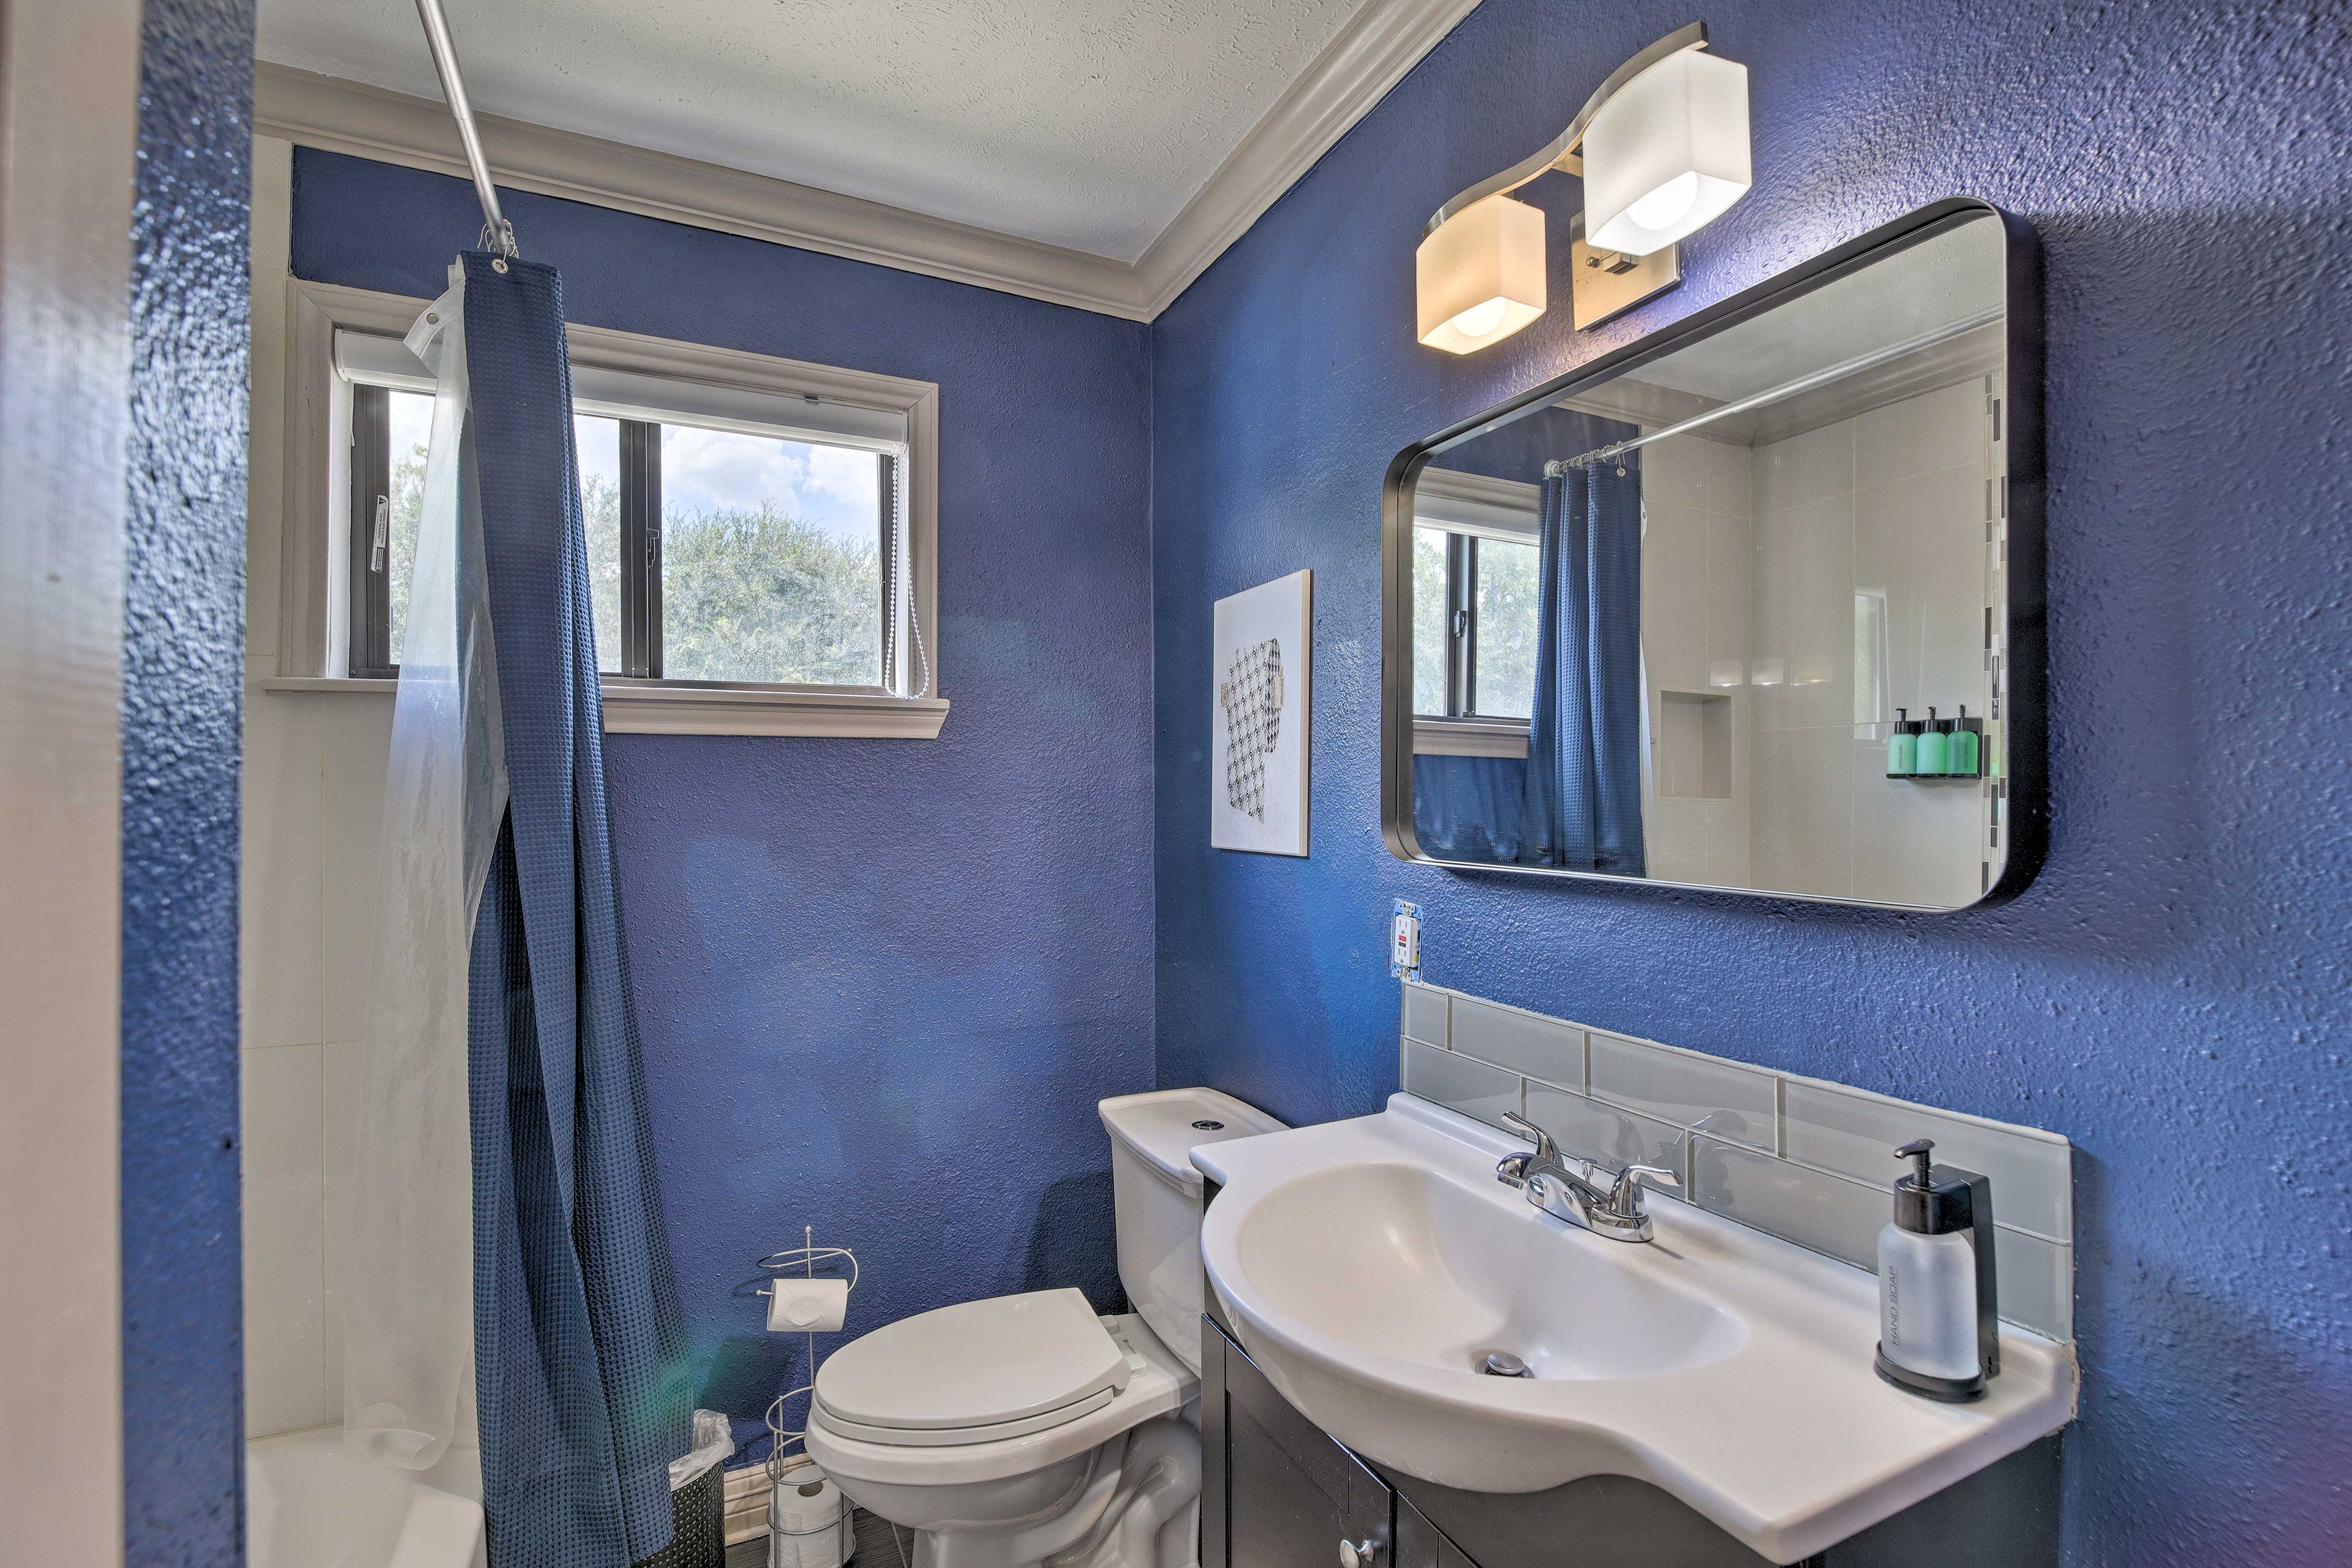 Full Bathroom | Complimentary Toiletries | Hair Dryer | Towels Provided